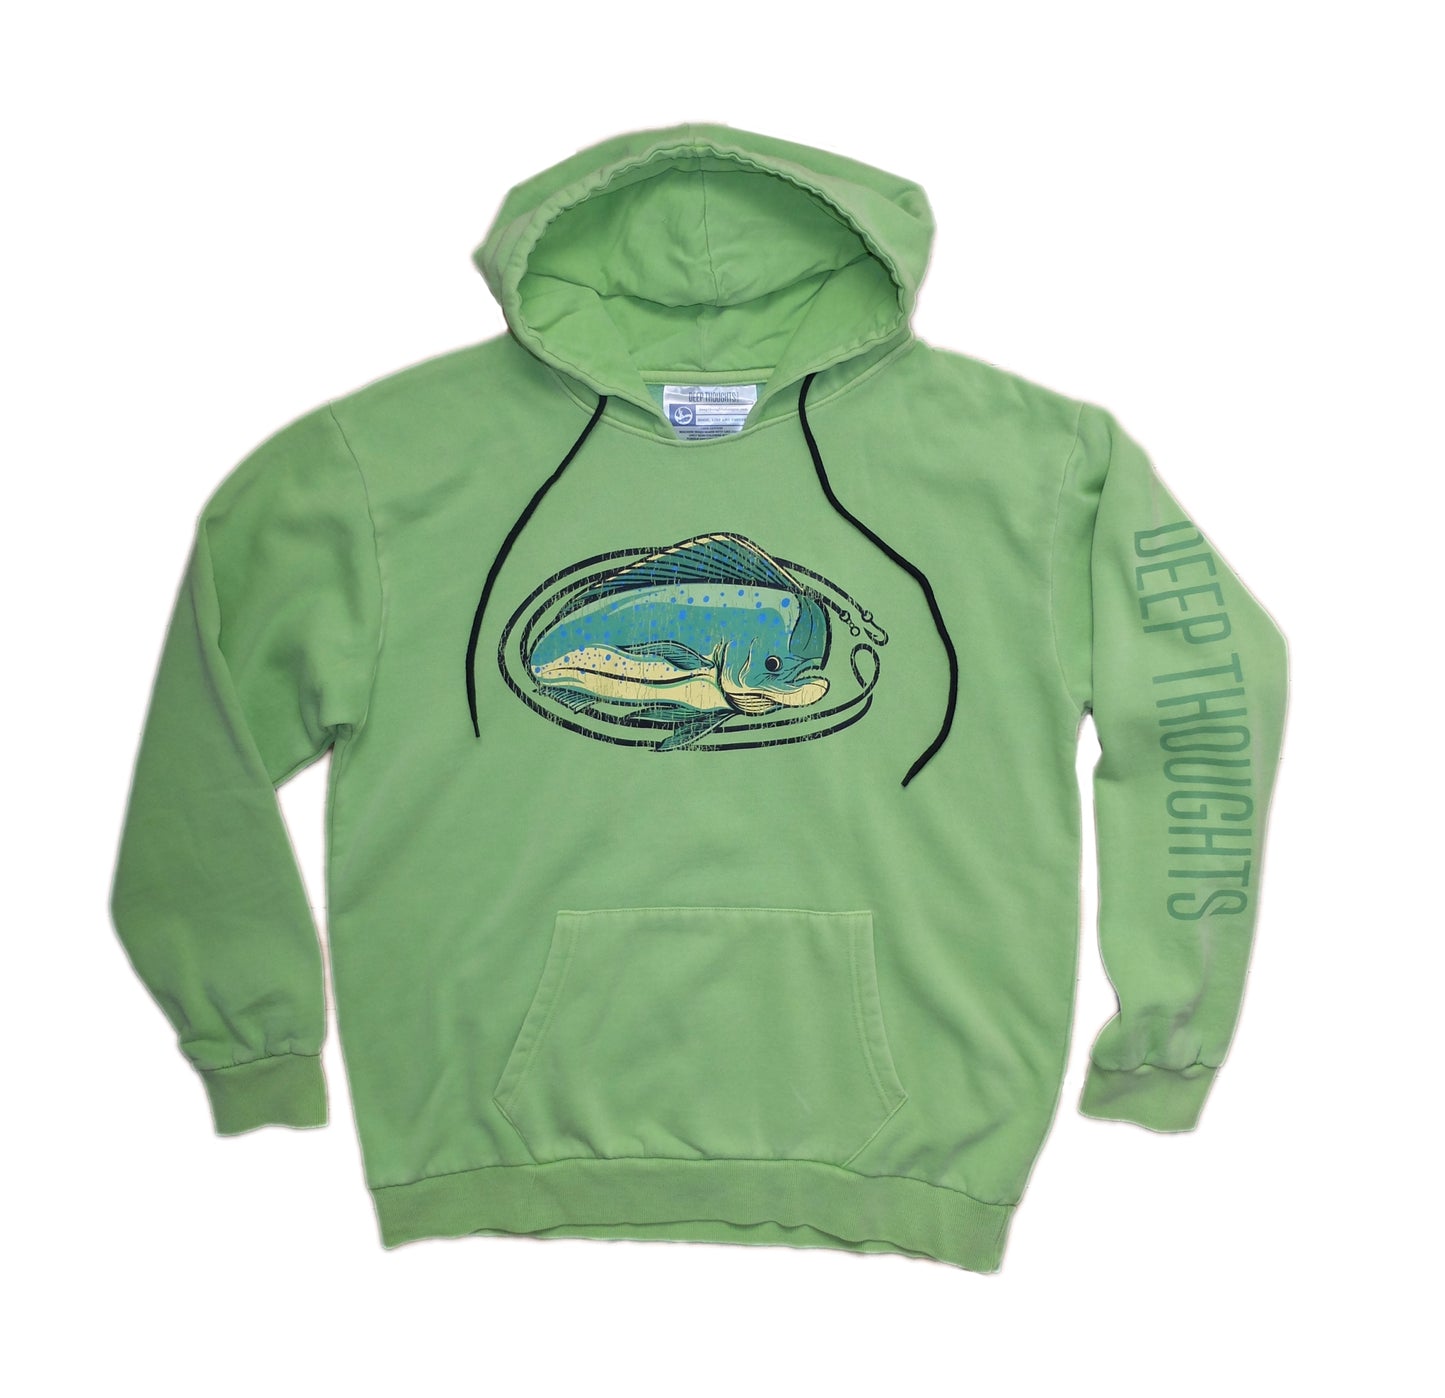 washed lime green hoodie with vintage style mahi mahi fishing graphic